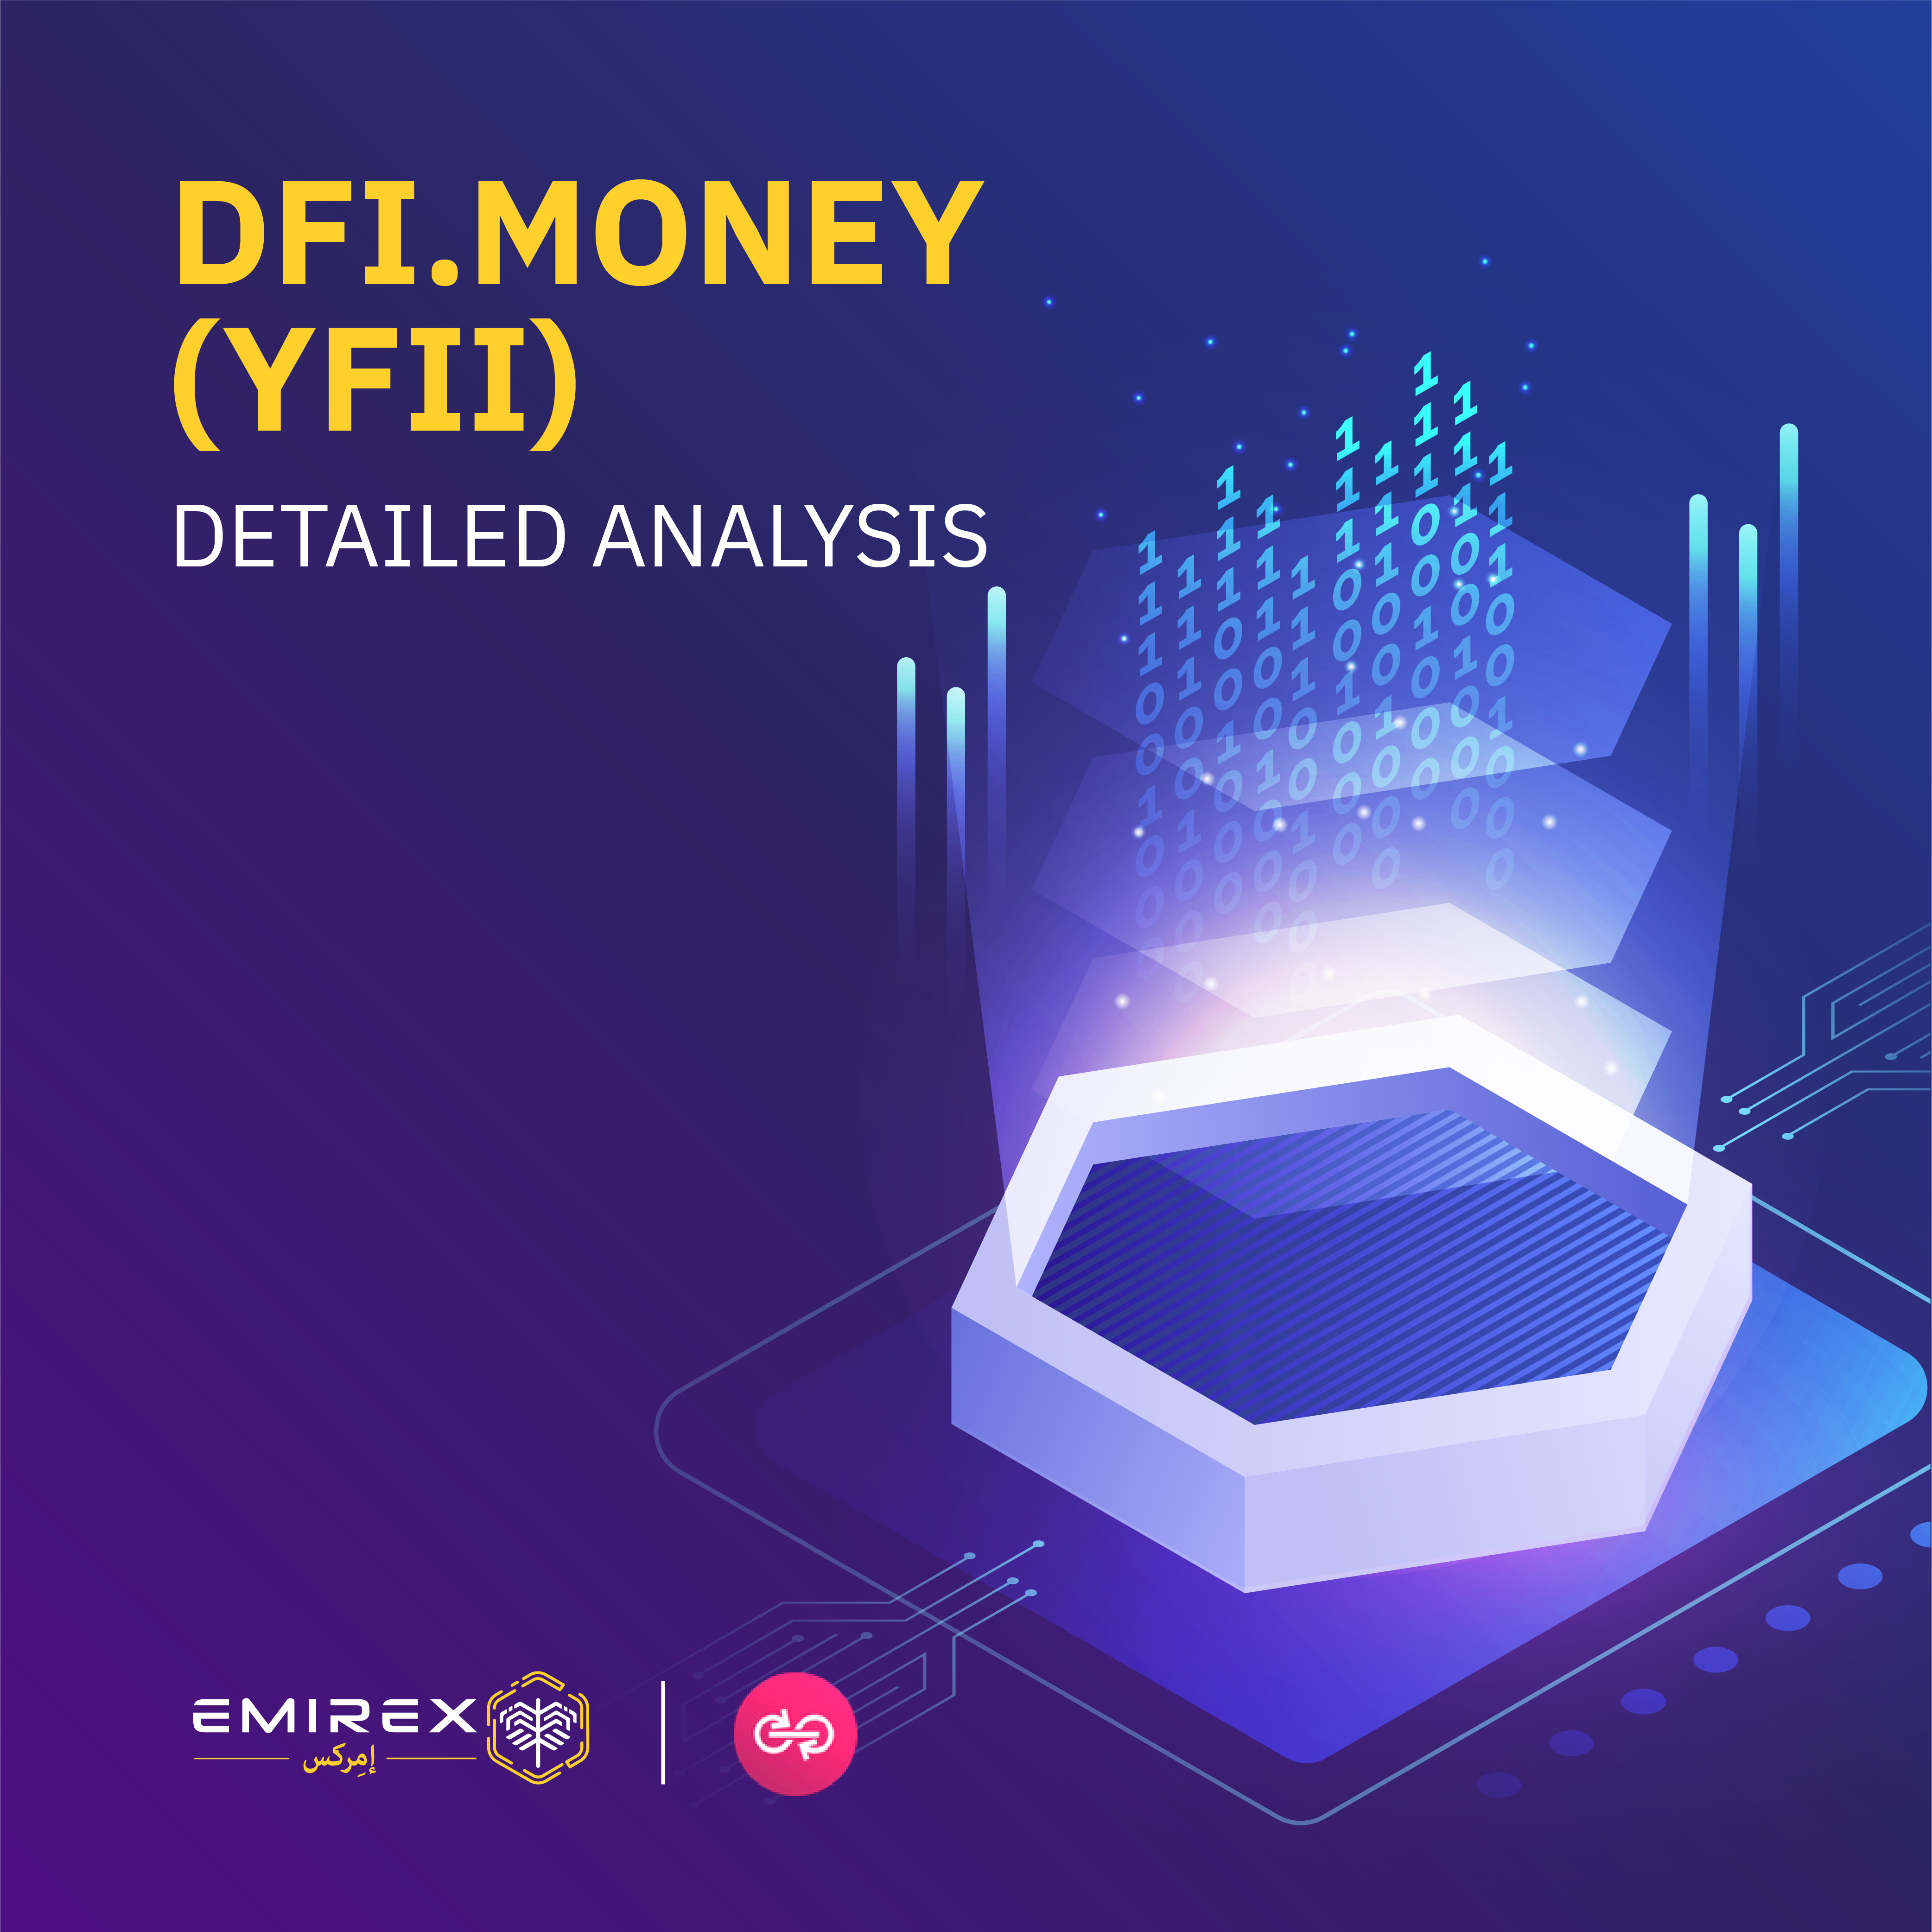 Detailed Analysis of DFI.Money (YFII)